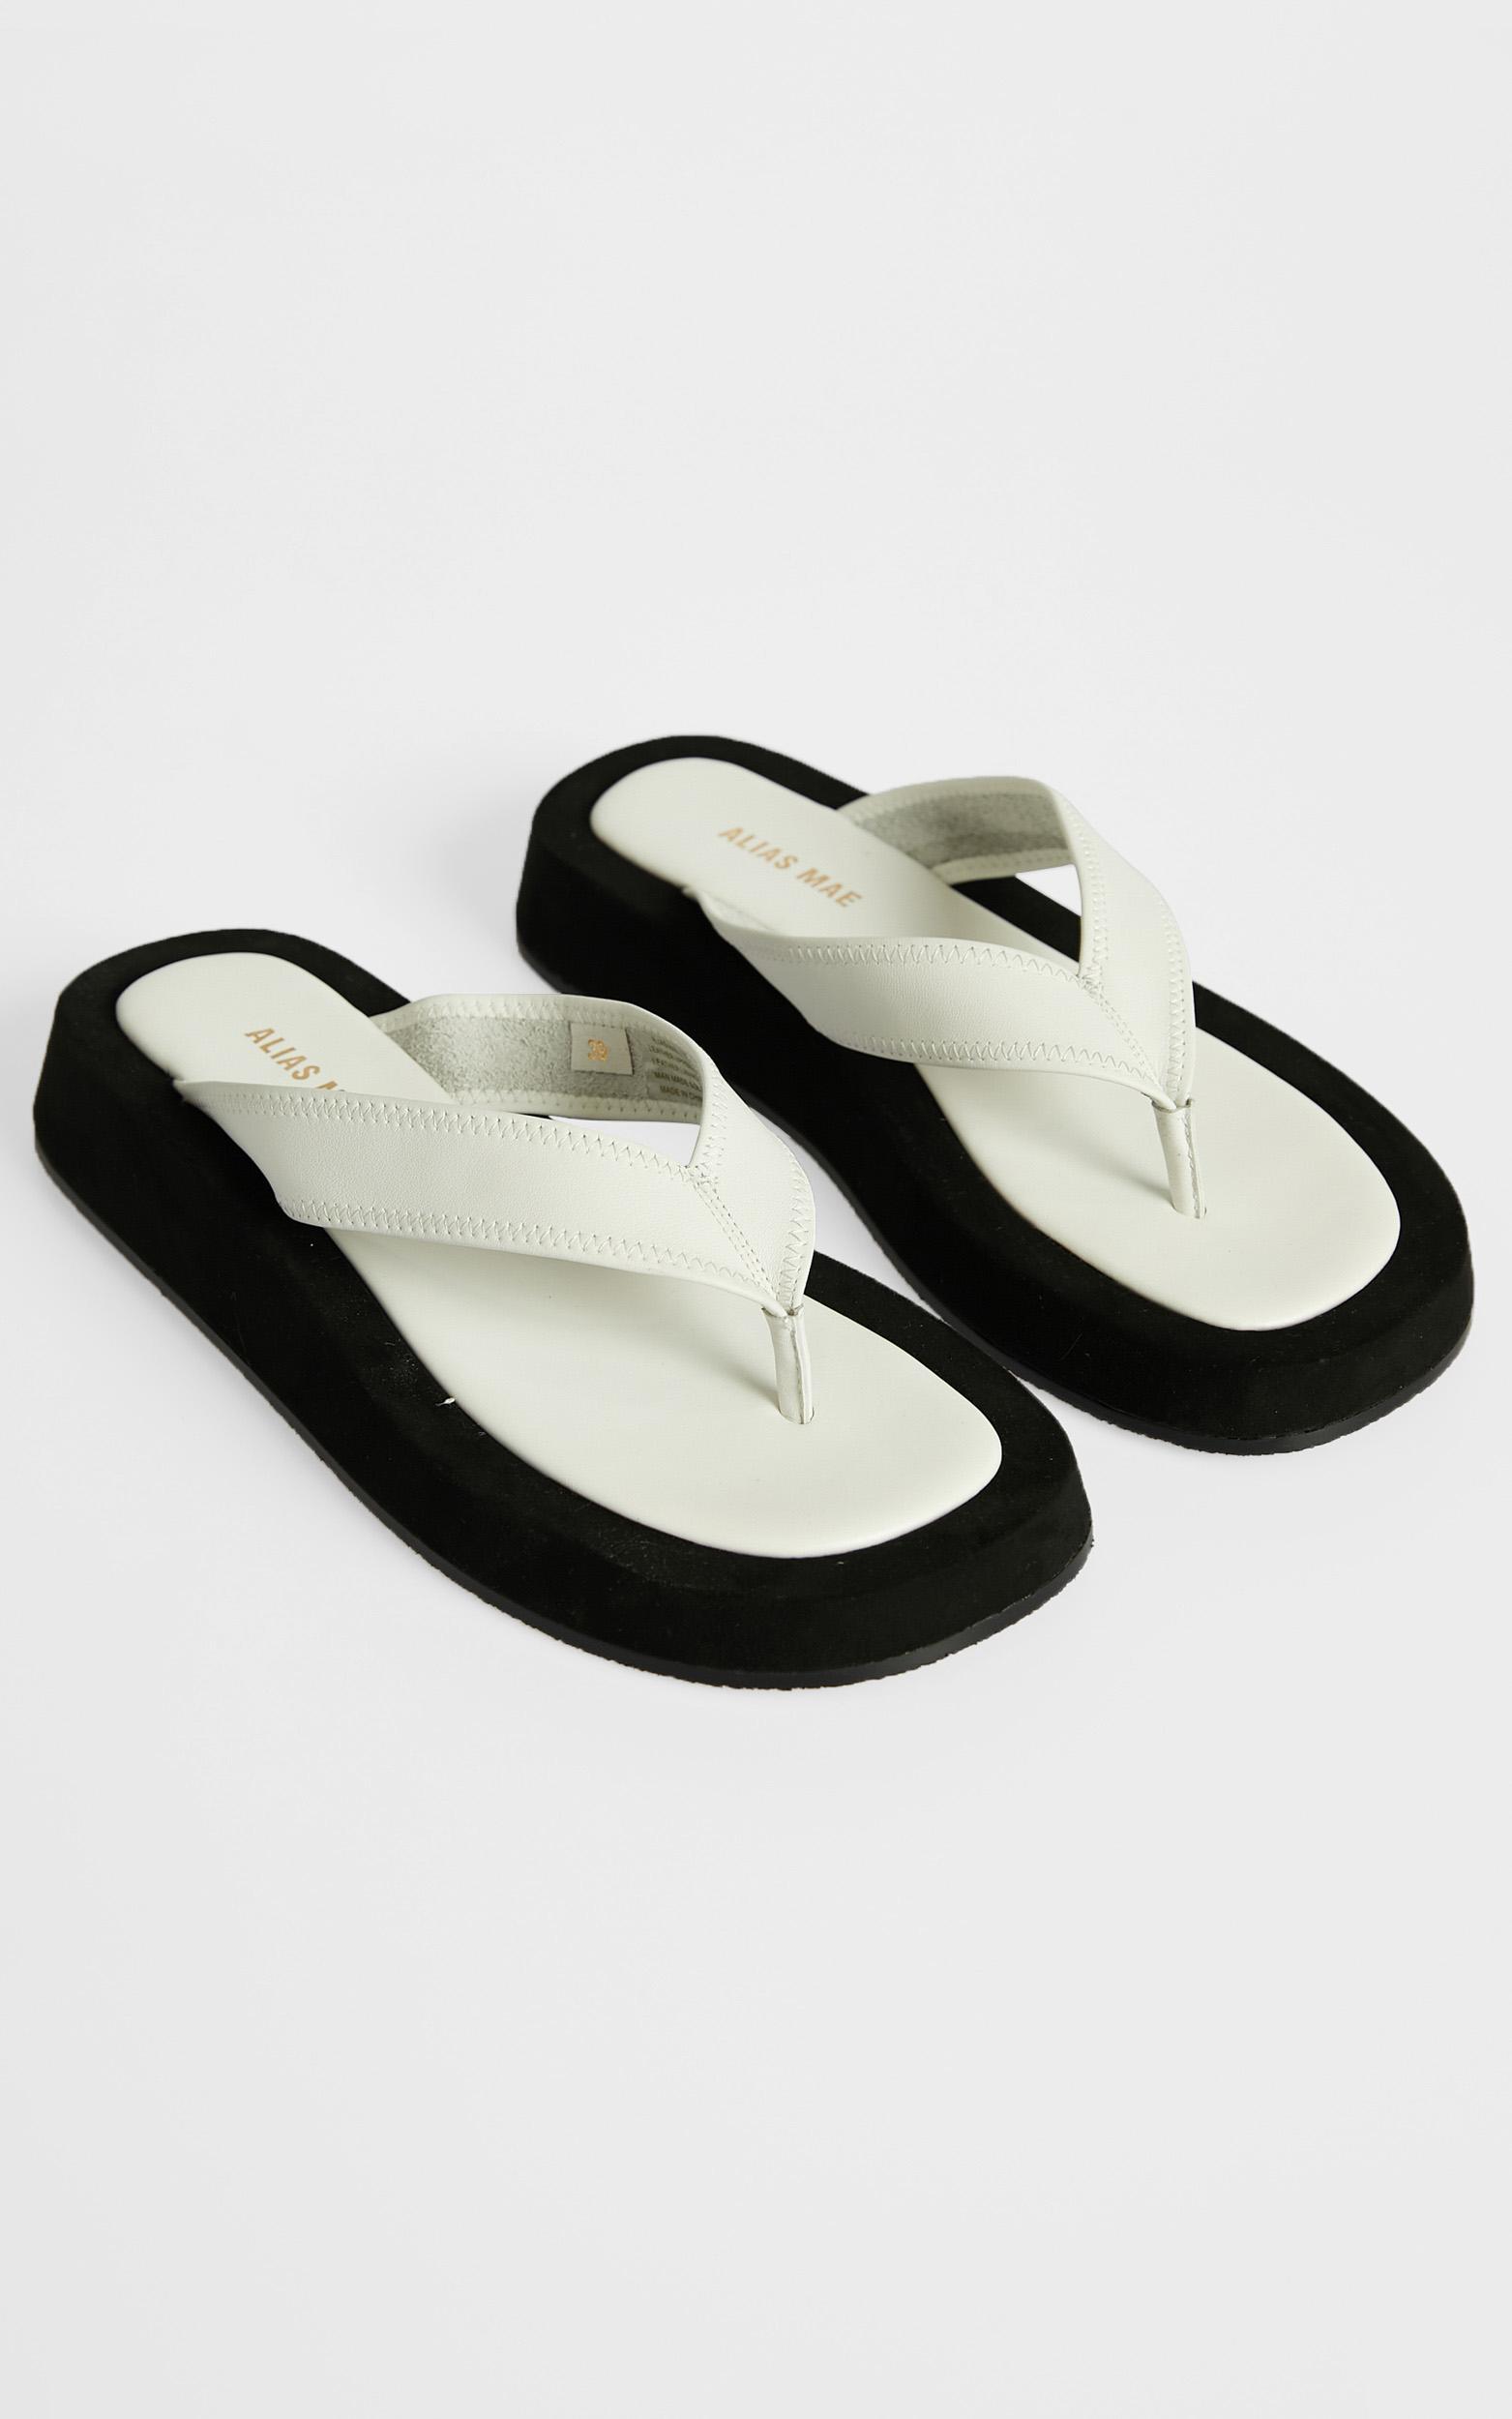 Alias Mae - Poppy Sandals in Ivory Leather | Showpo